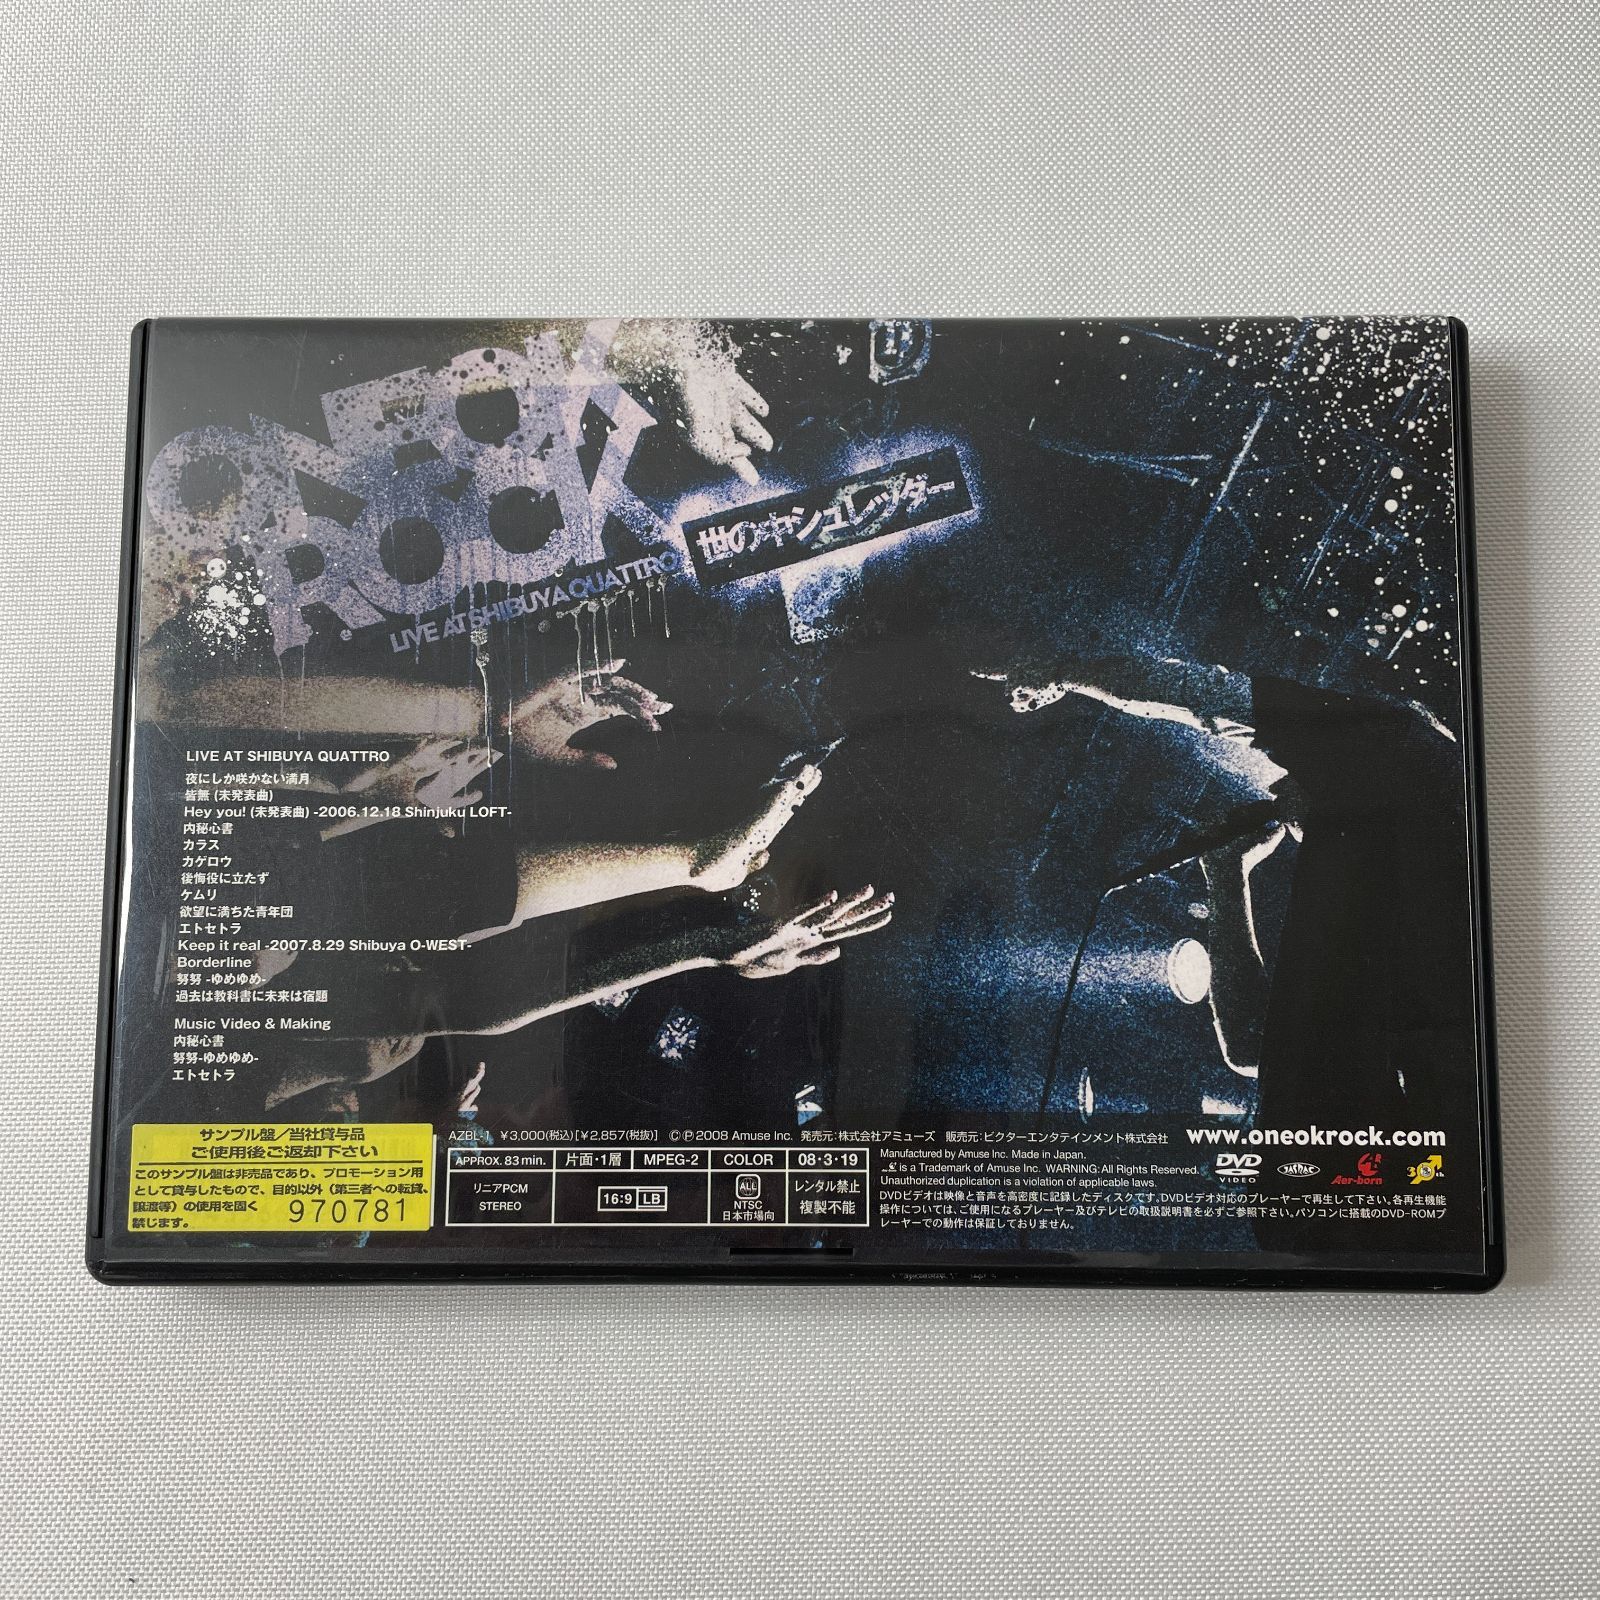 【ONE OK ROCK LIVE DVD “世の中シュレッダー”】DVD 内秘心書 努努-ゆめゆめ- エトセトラ 再生確認済み 見本盤